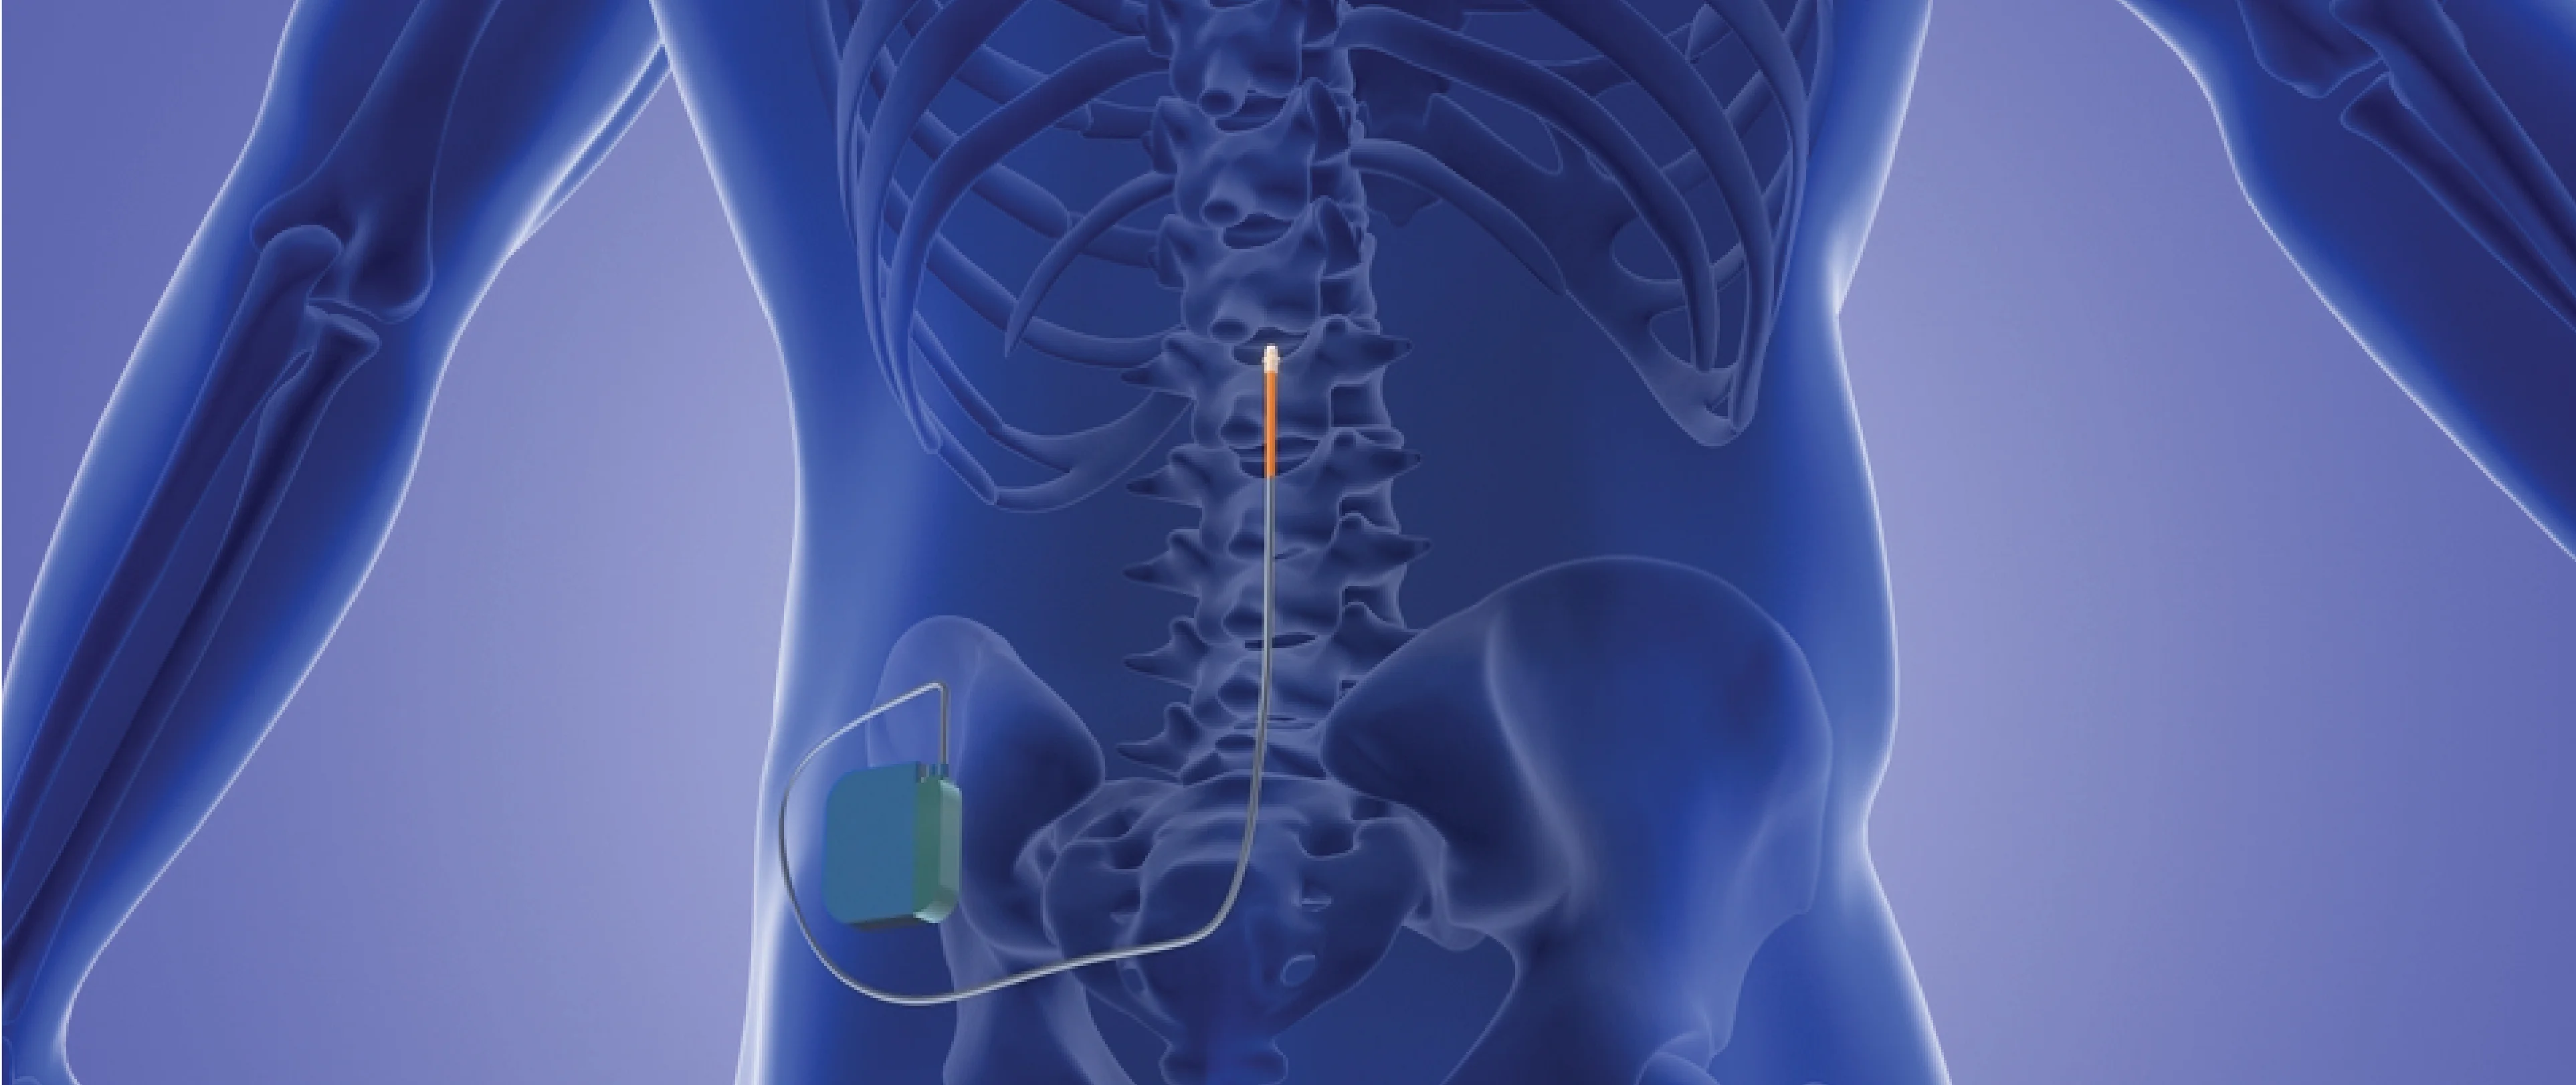 Epidural stimulation, spinal cord injury treatment